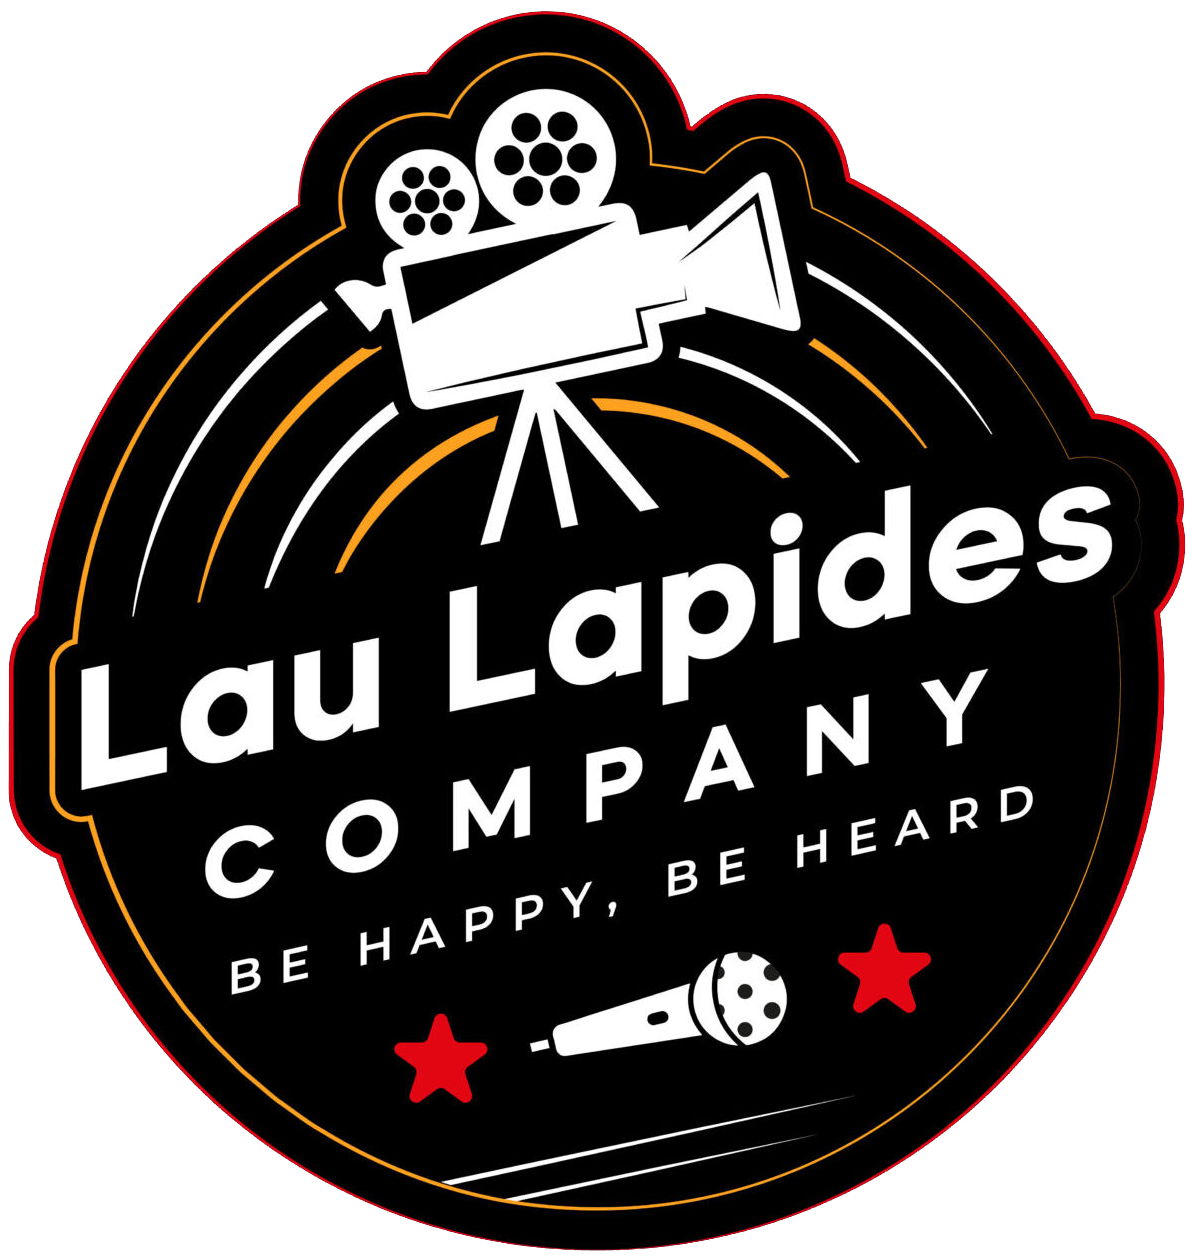 Lau Lapides Company